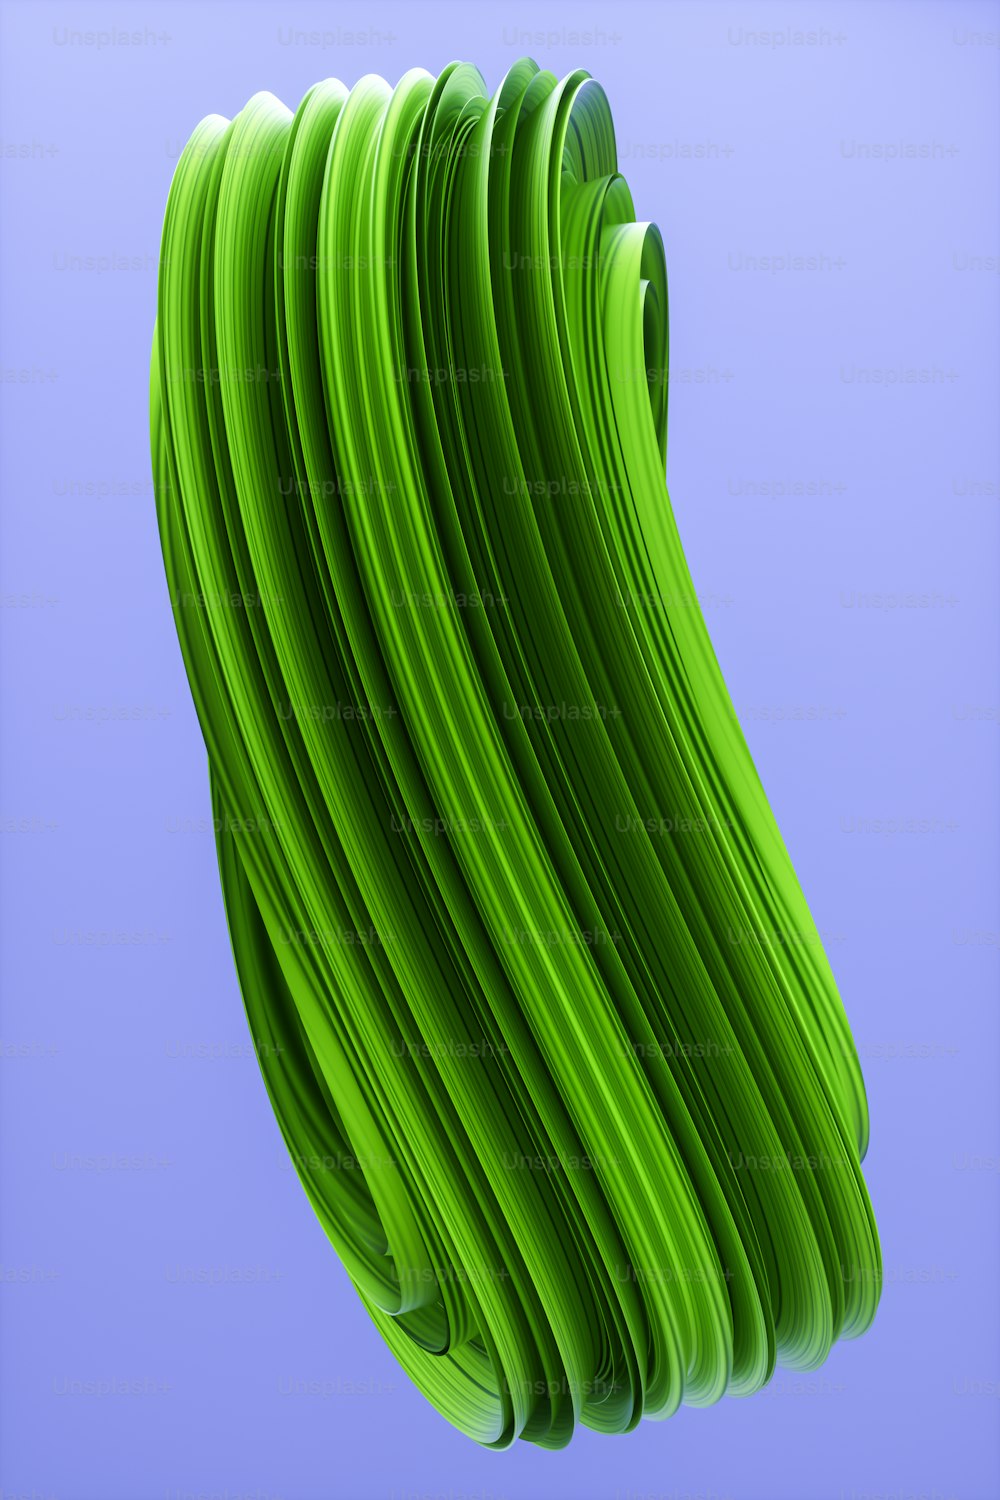 Un rendering 3D di un materiale verde ondulato